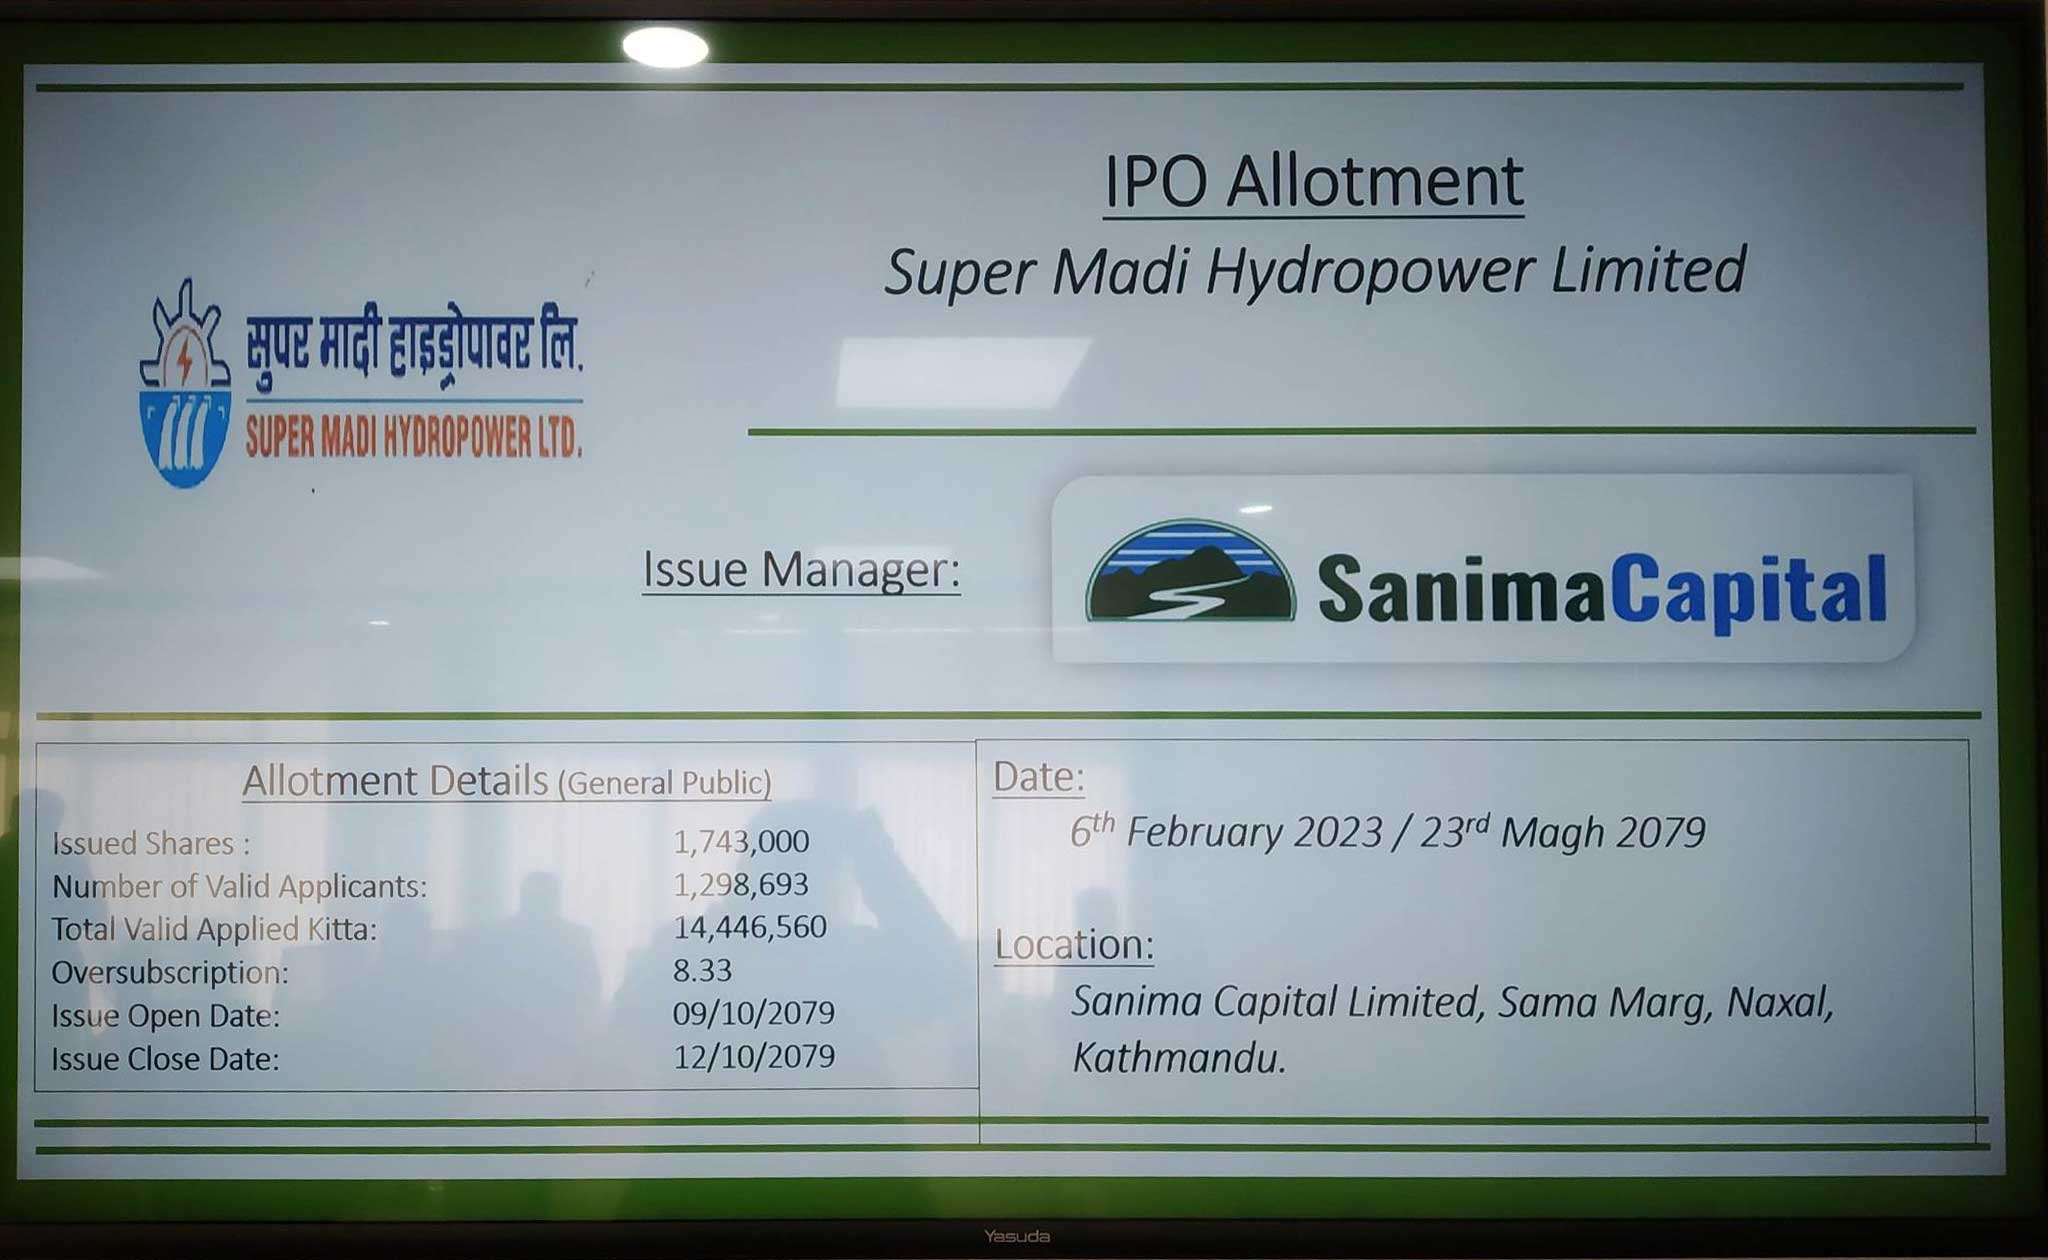 Super Madi Hydropower Allots IPO